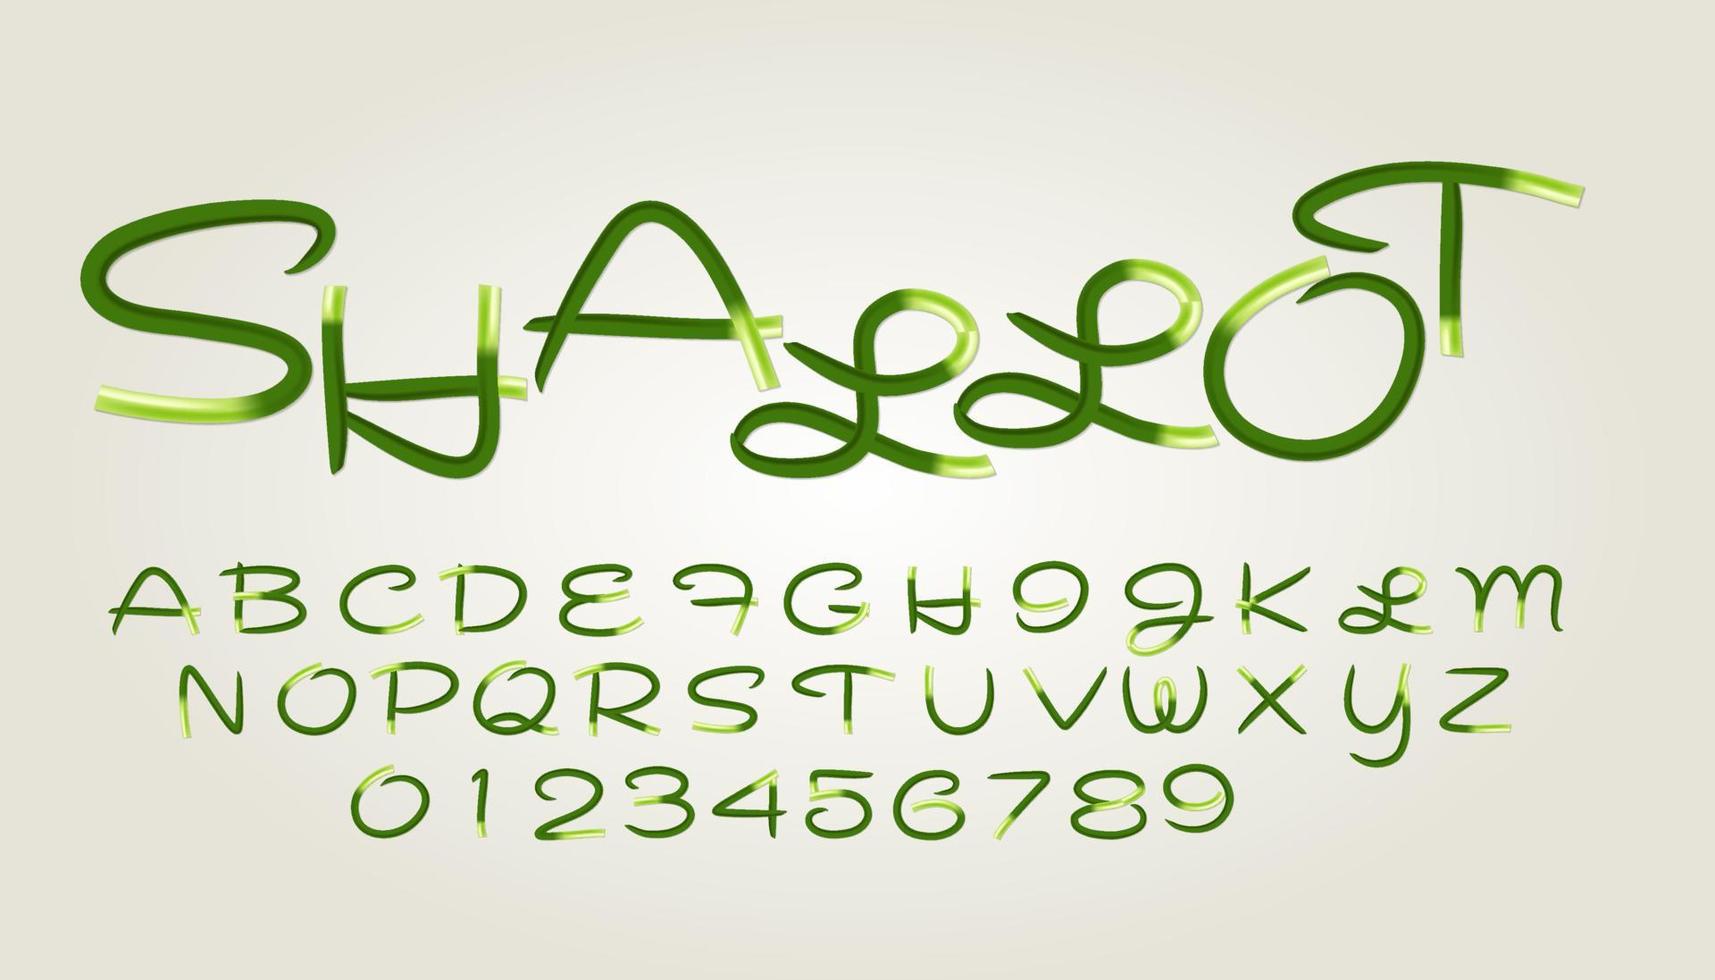 design de fonte estilo chalota verde, letras do alfabeto e números, vetor eps10.